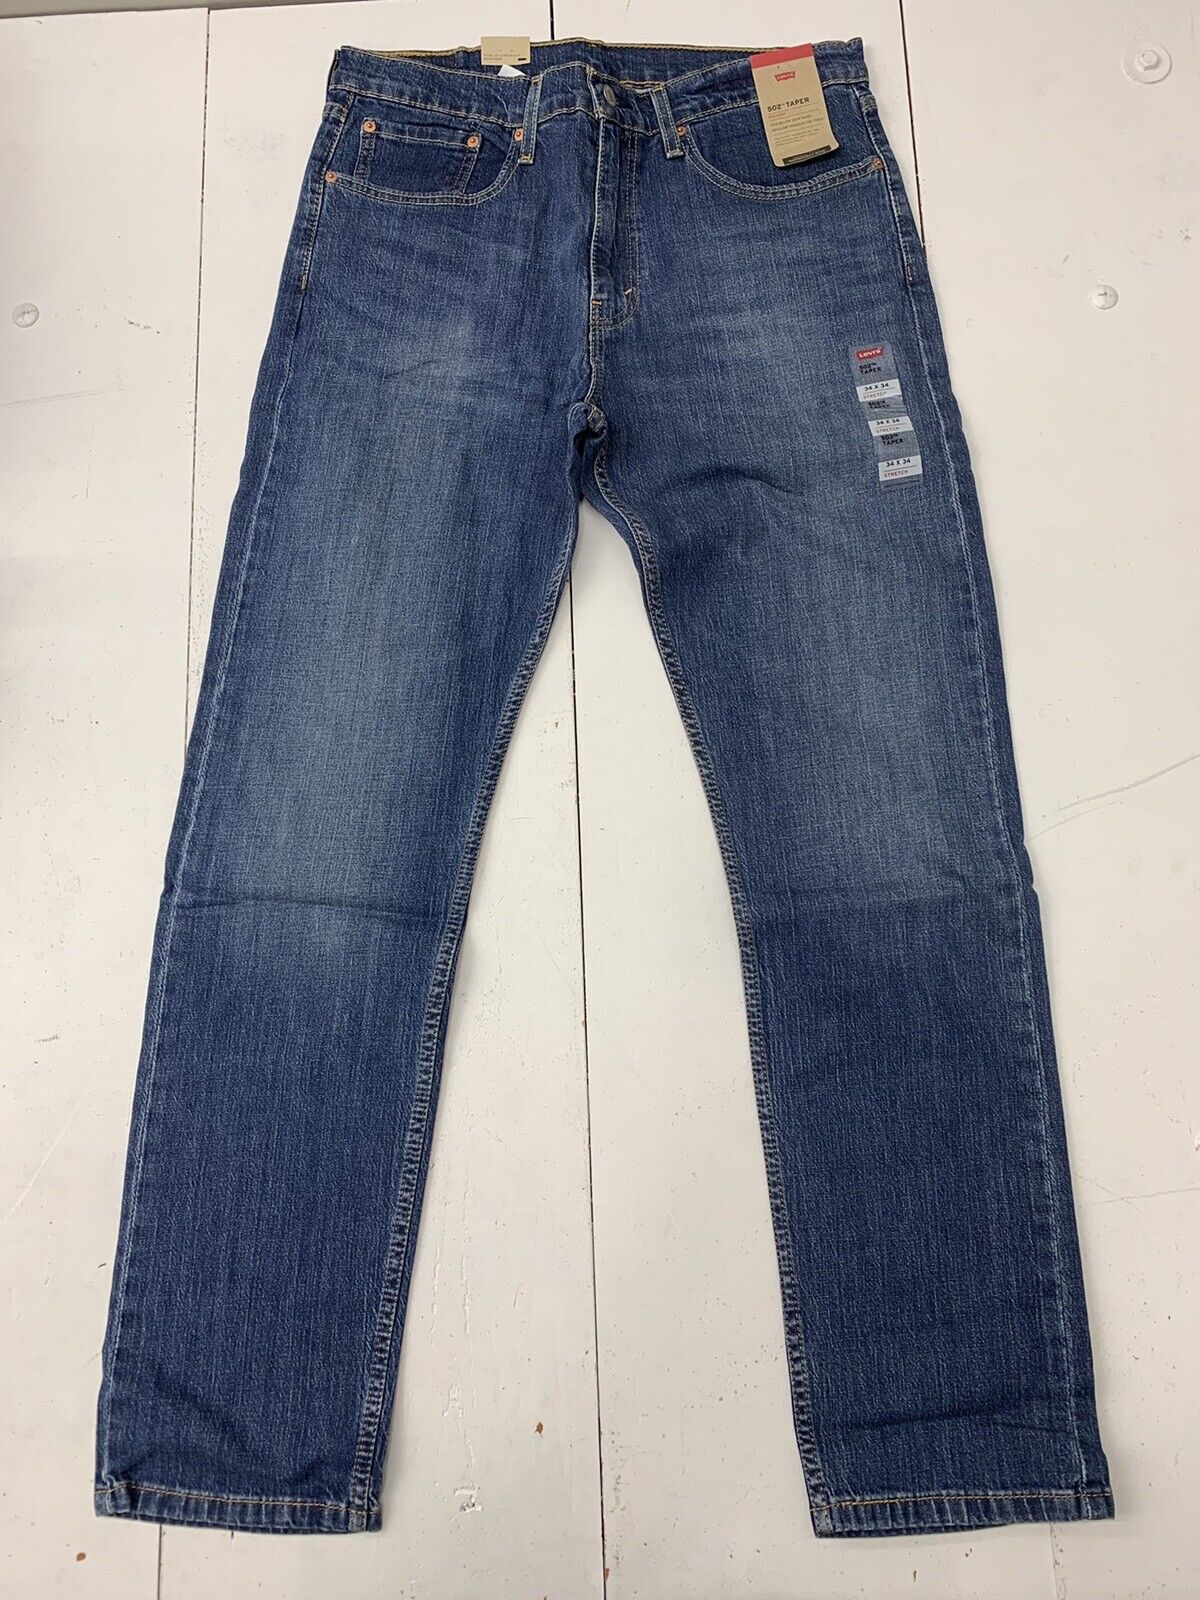 huurling fusie galop Levi's 502 Taper Mens Blue Denim Jeans Size 34x34 New - beyond exchange